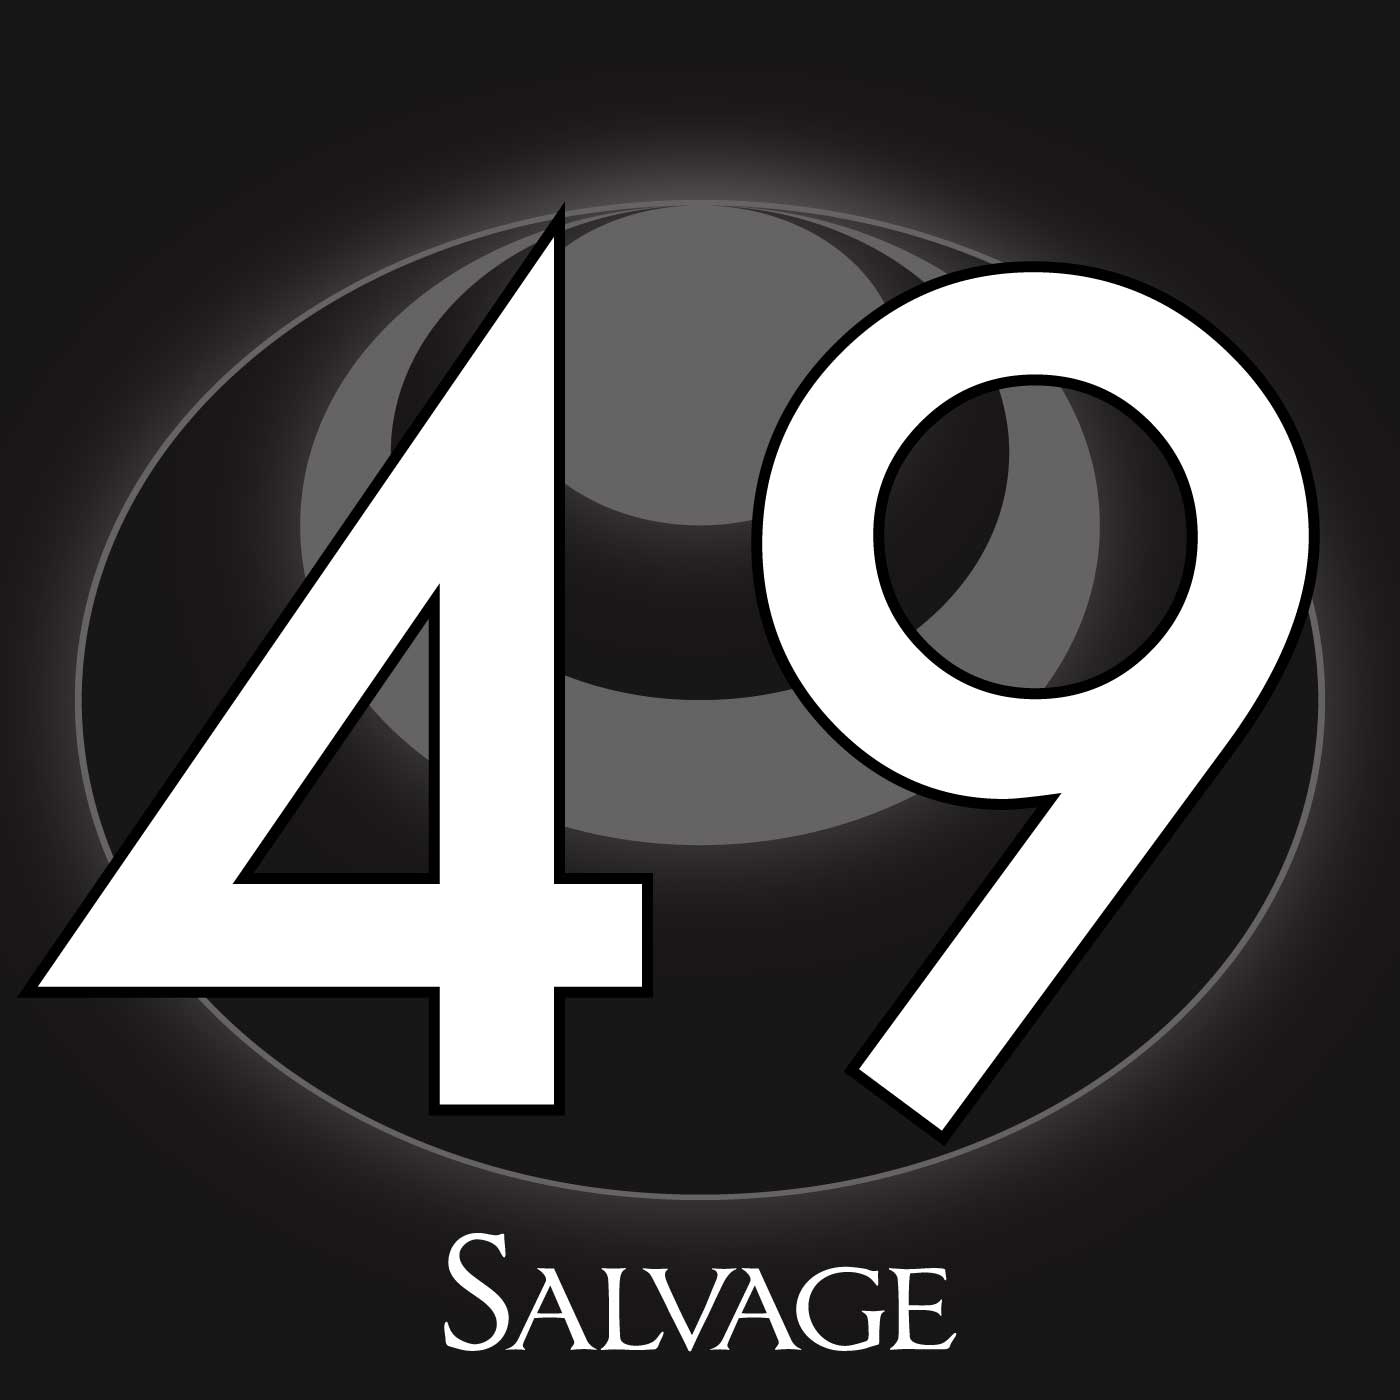 49 – Salvage